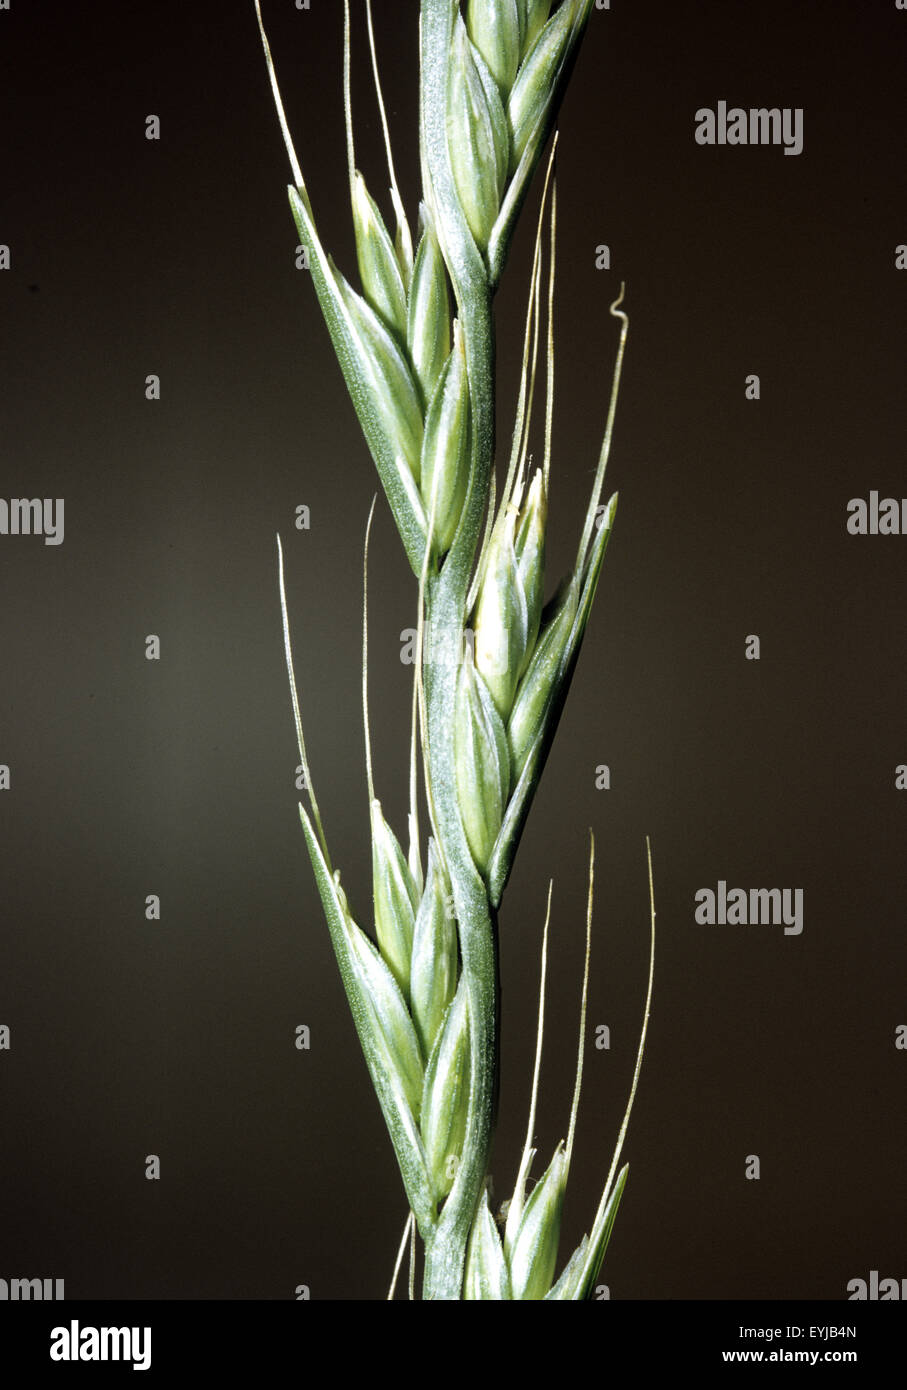 Taumellolch; Giftpflanze, Lolium temulentum, Getreide Foto Stock